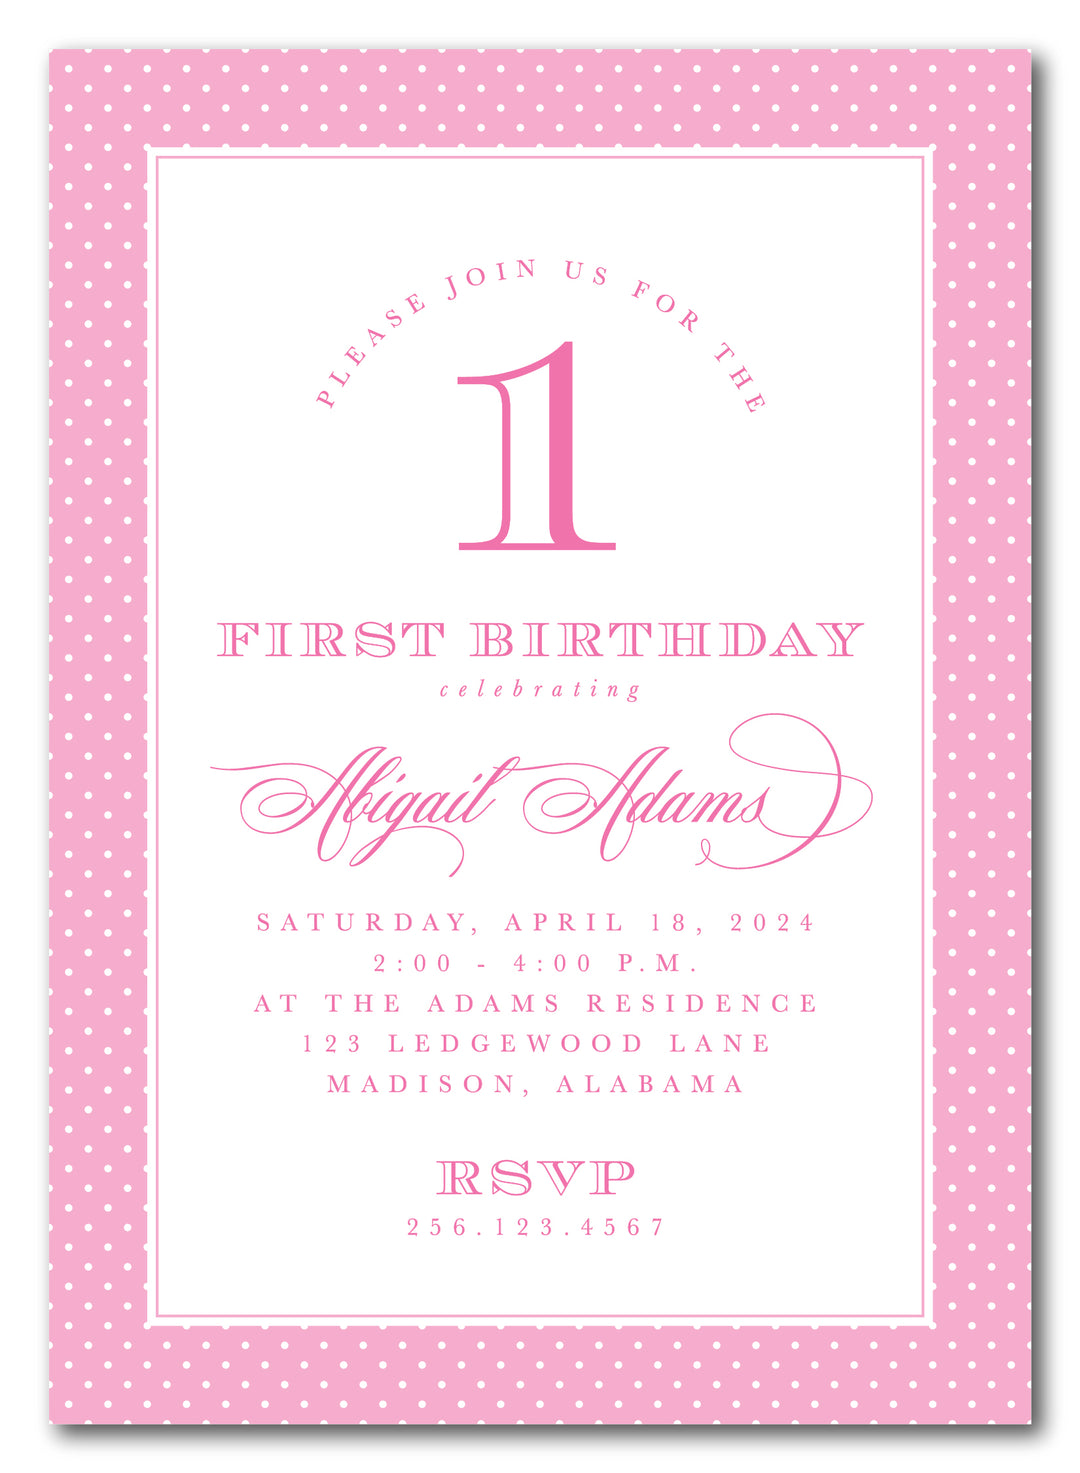 The Pink Dot Birthday Party Invitation